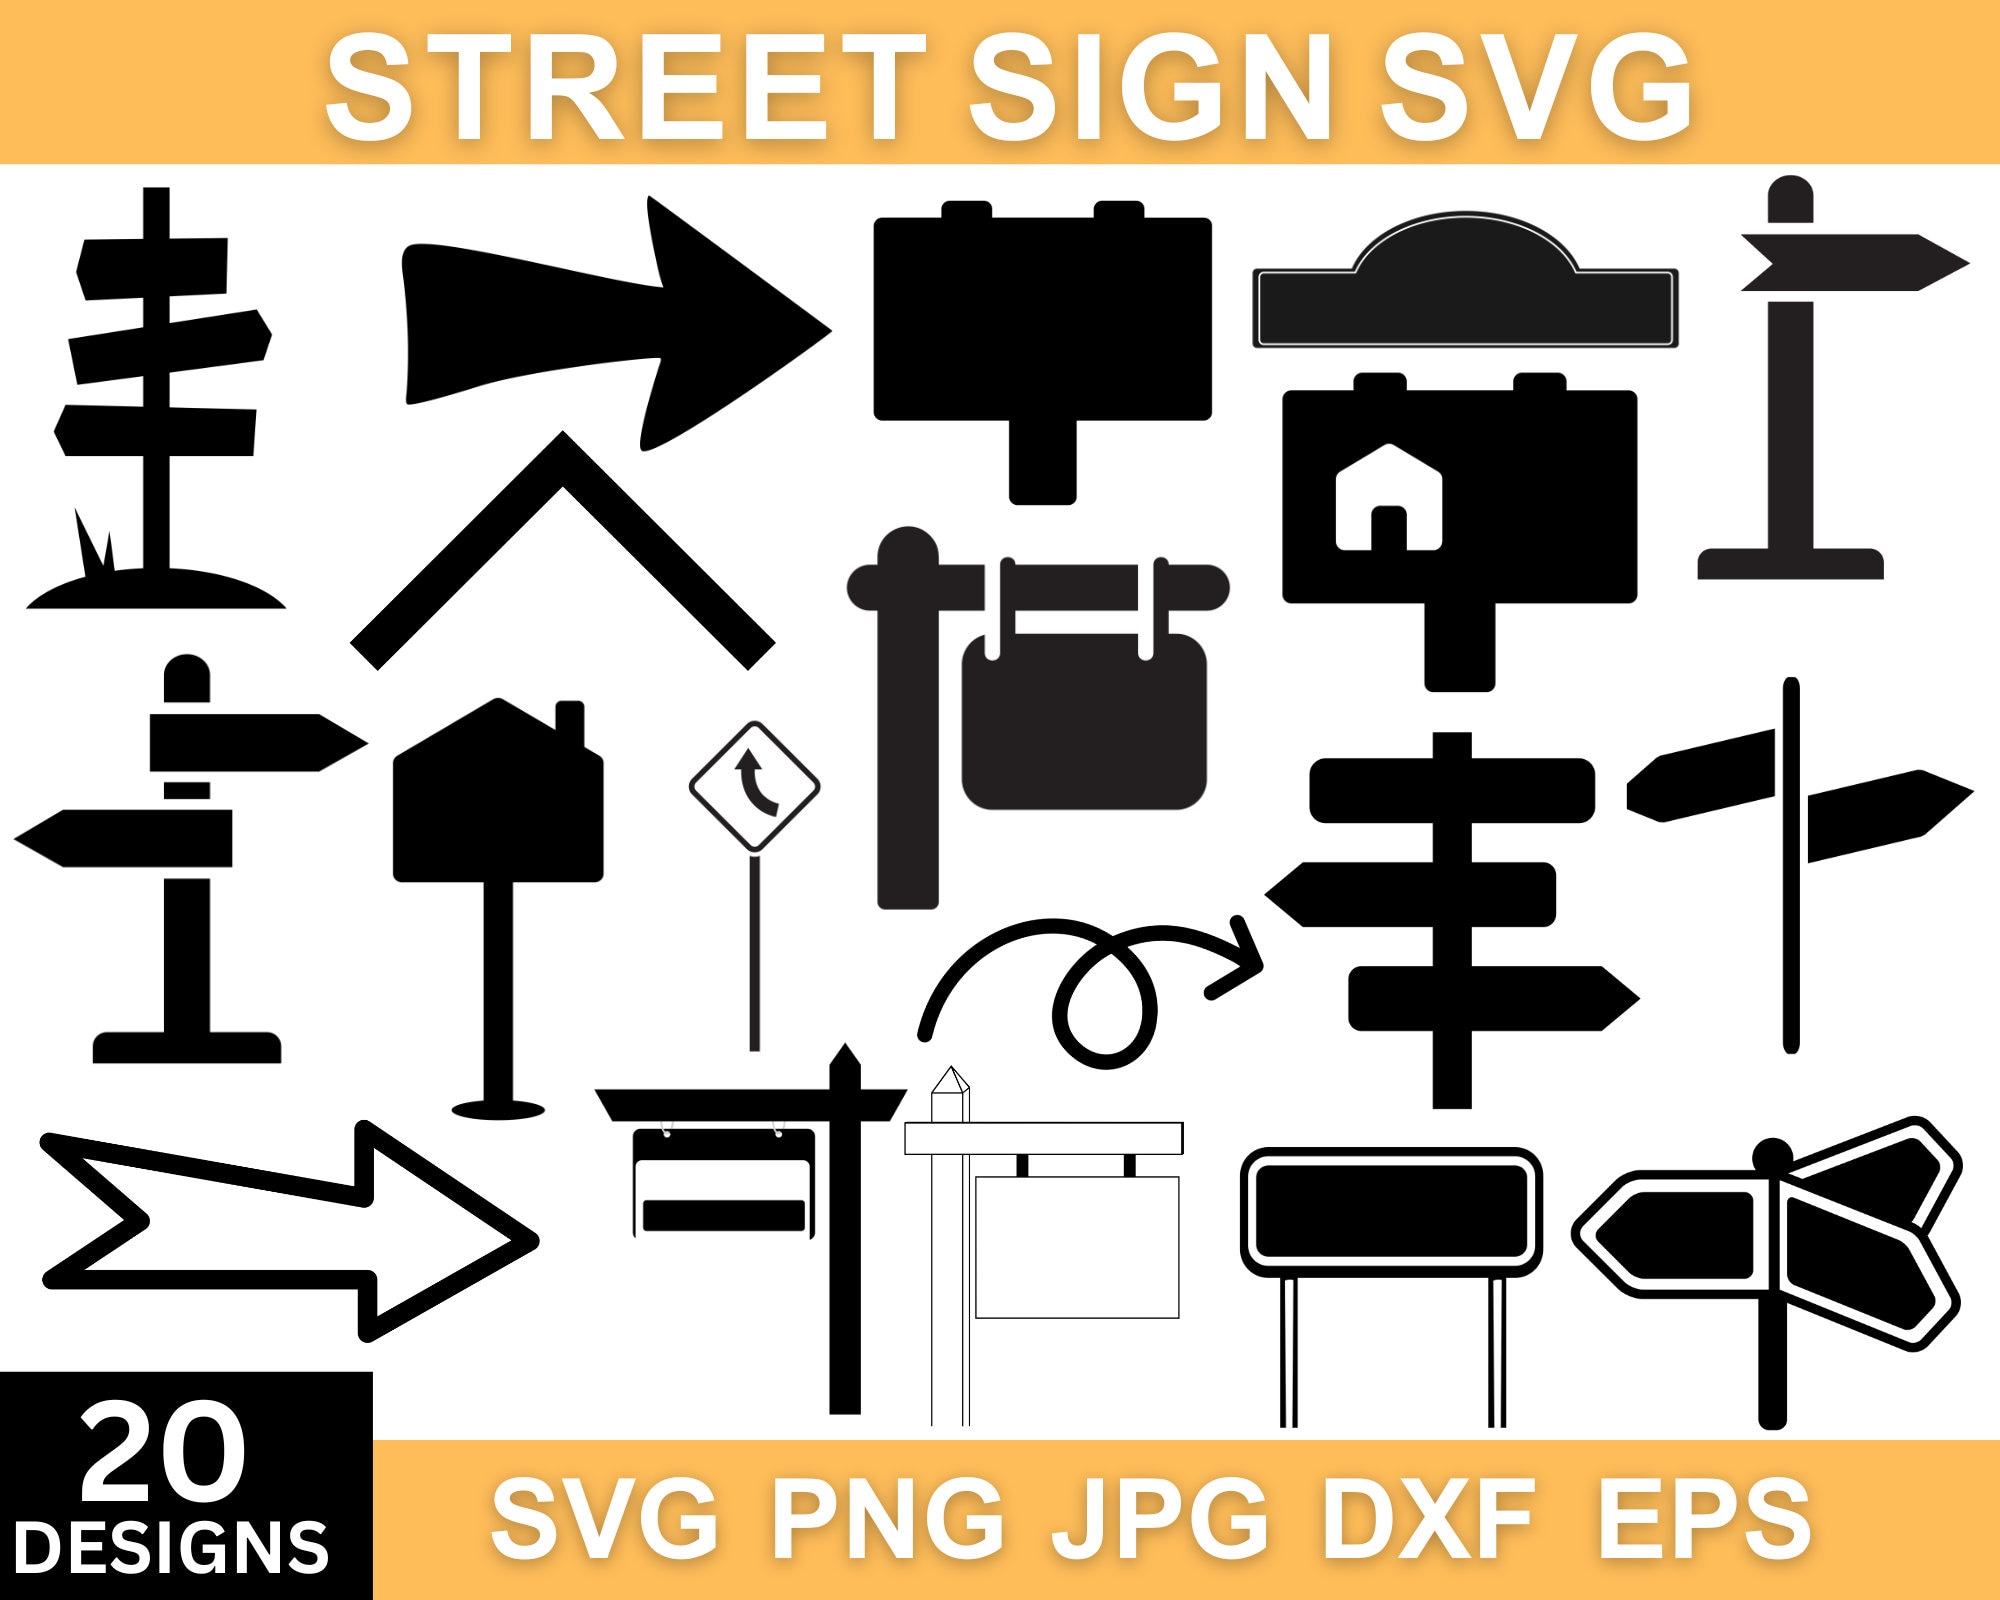 lllᐅ Fashion Brands Street Sign SVG - sublimation Cricut silhouette cut file